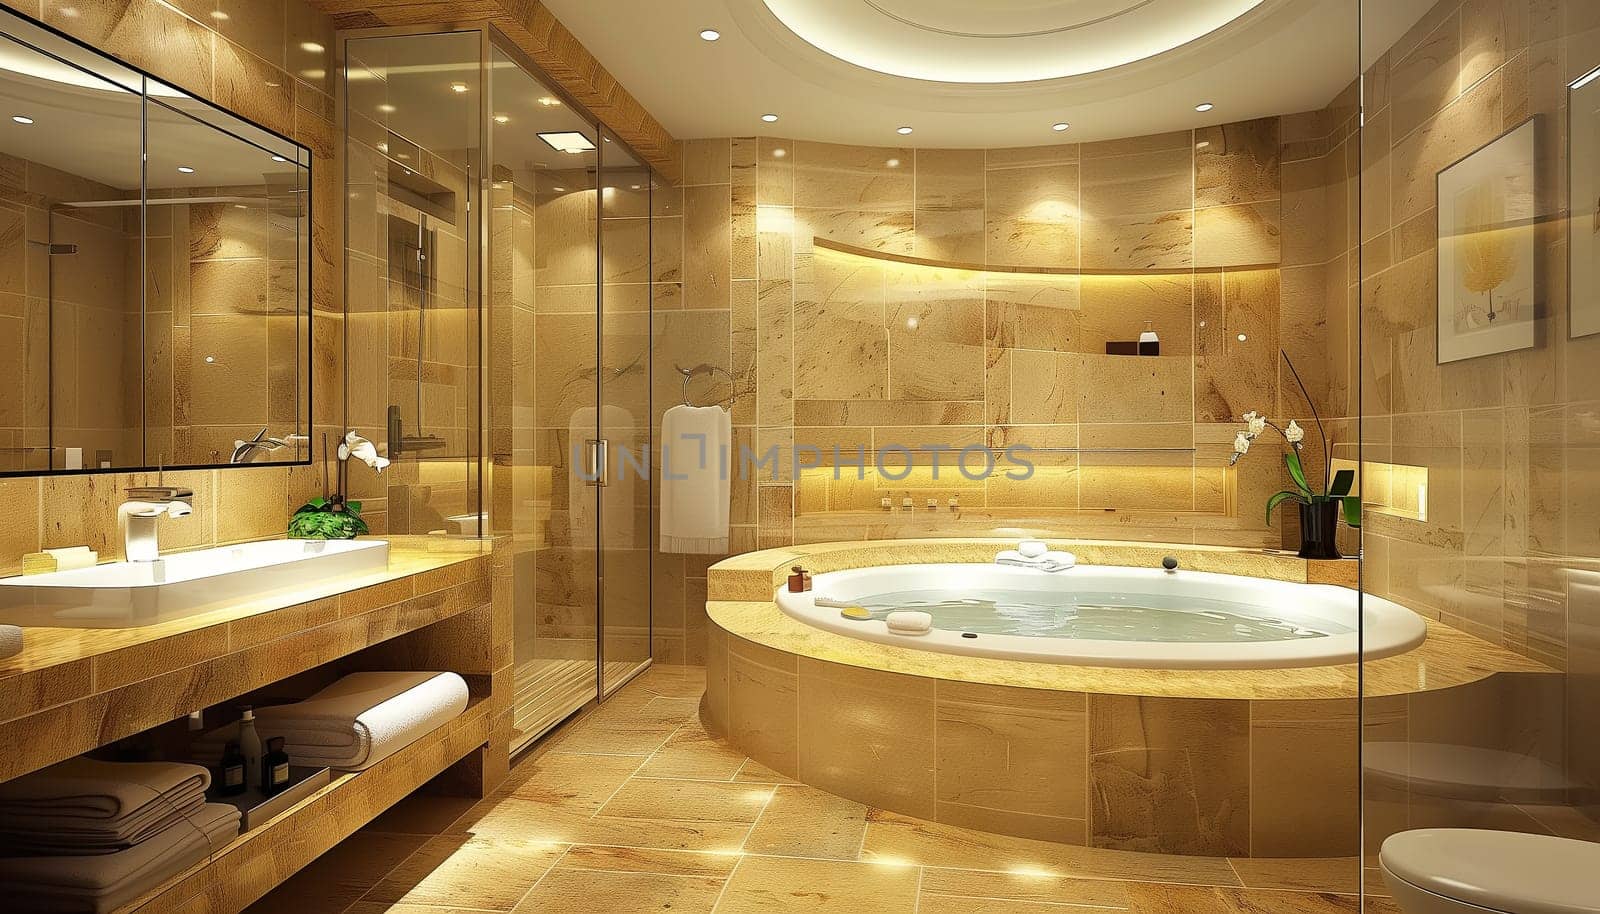 Beautiful Large Bathroom in Luxury Home.